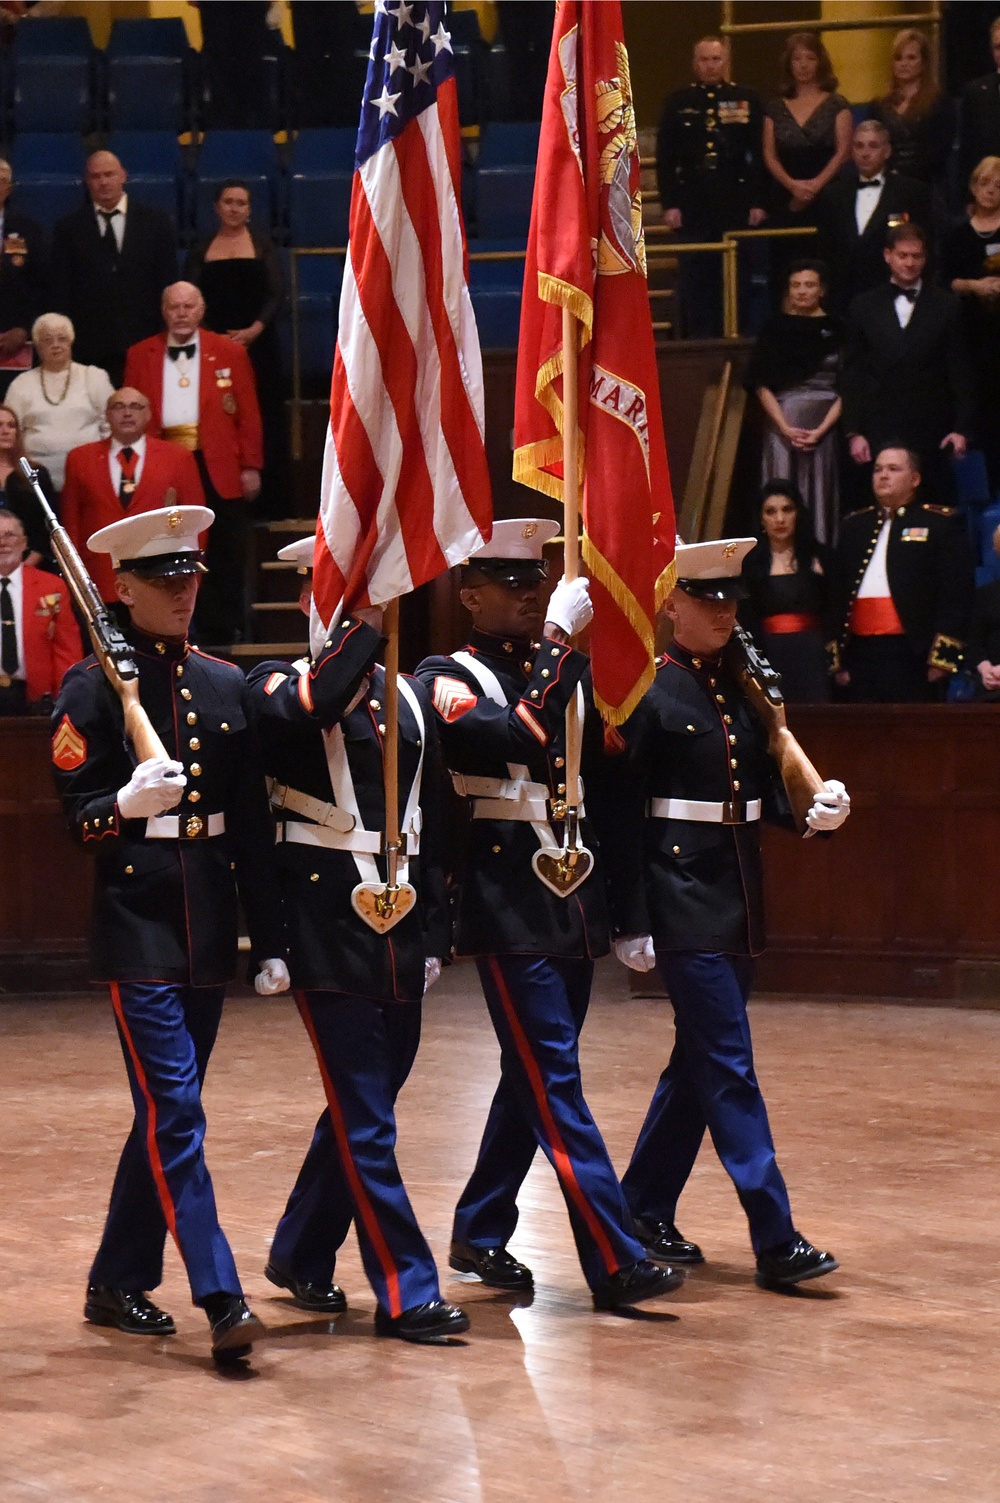 U.S. Marine Corps celebrate 239th birthday